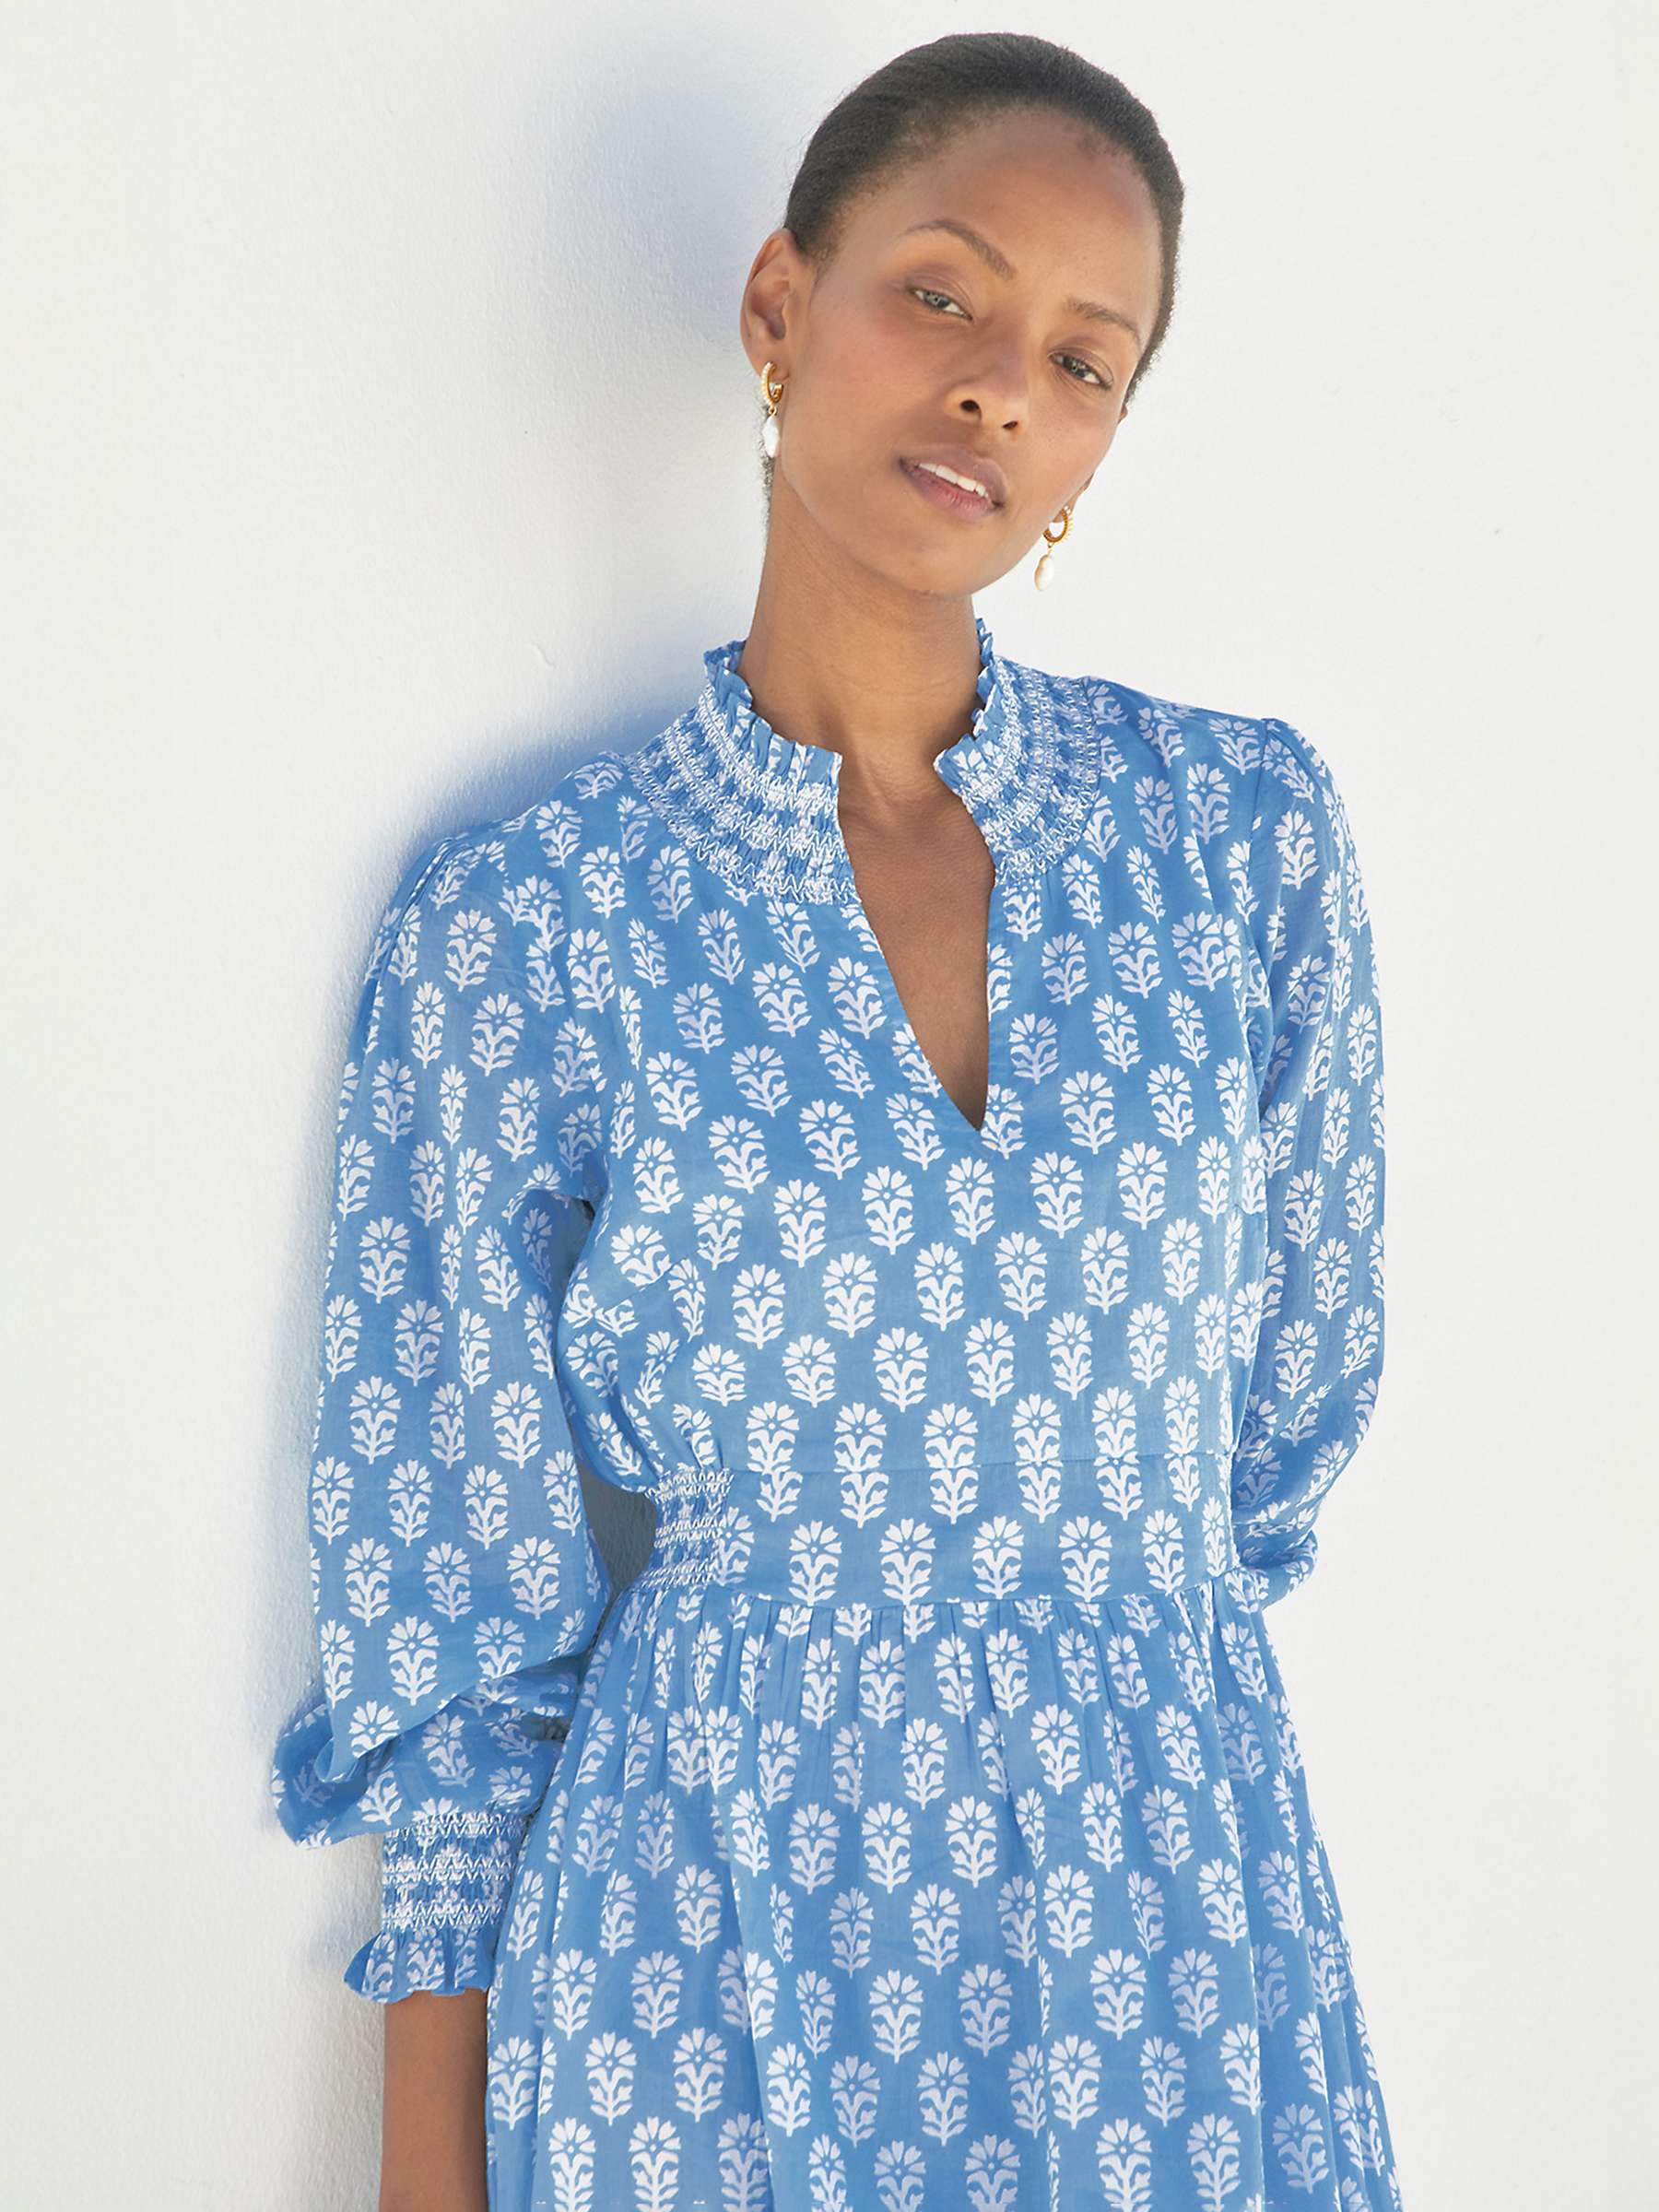 Buy Aspiga Emmeline Maxi Dress, Geranium Blue/White Online at johnlewis.com